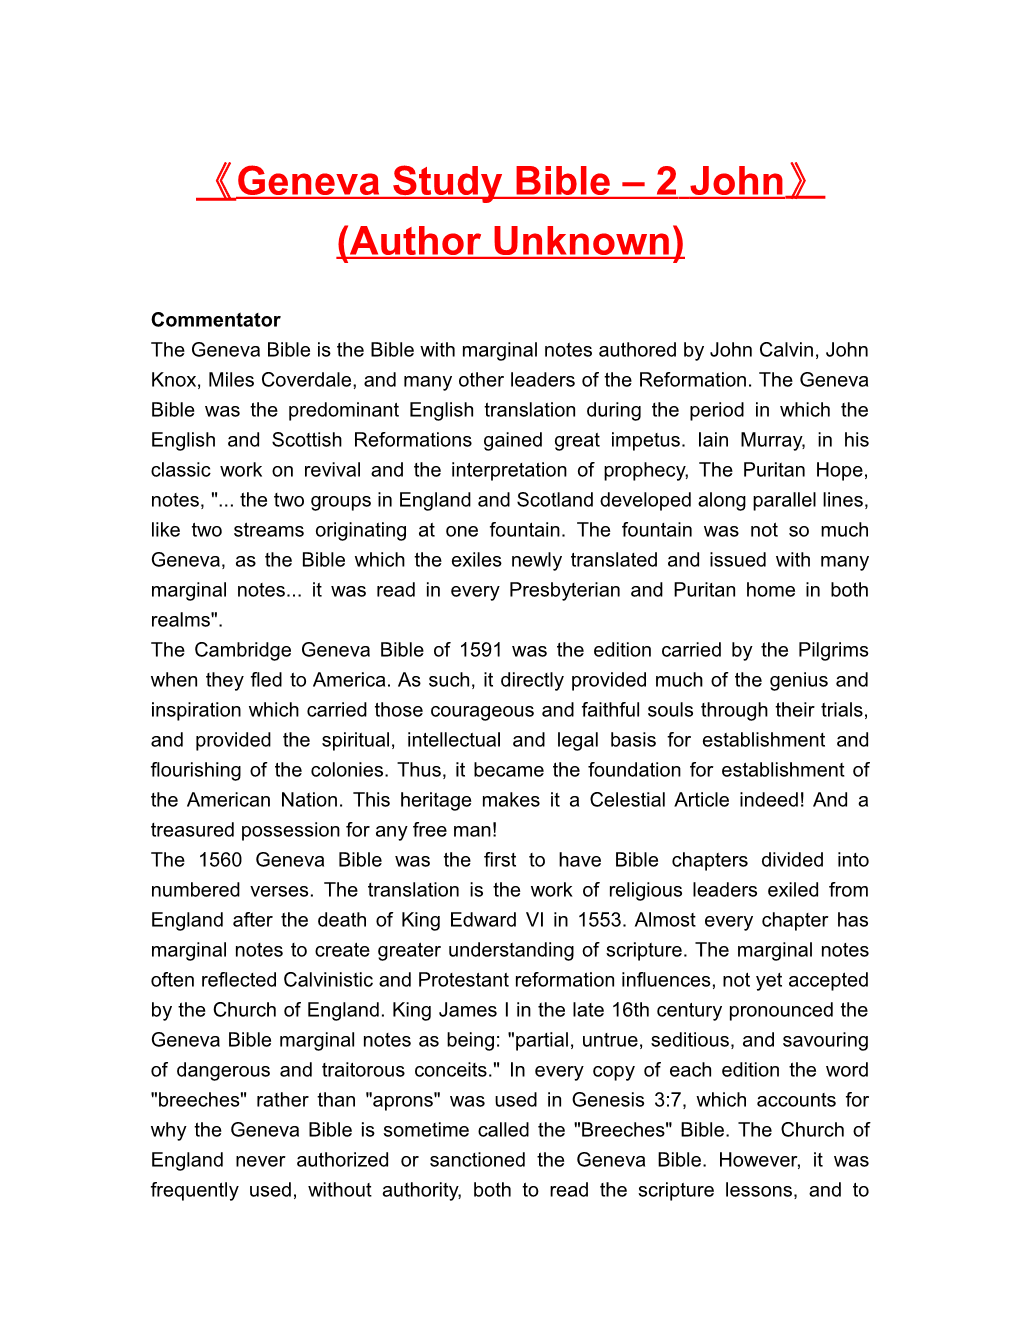 Geneva Study Bible 2 John (Author Unknown)